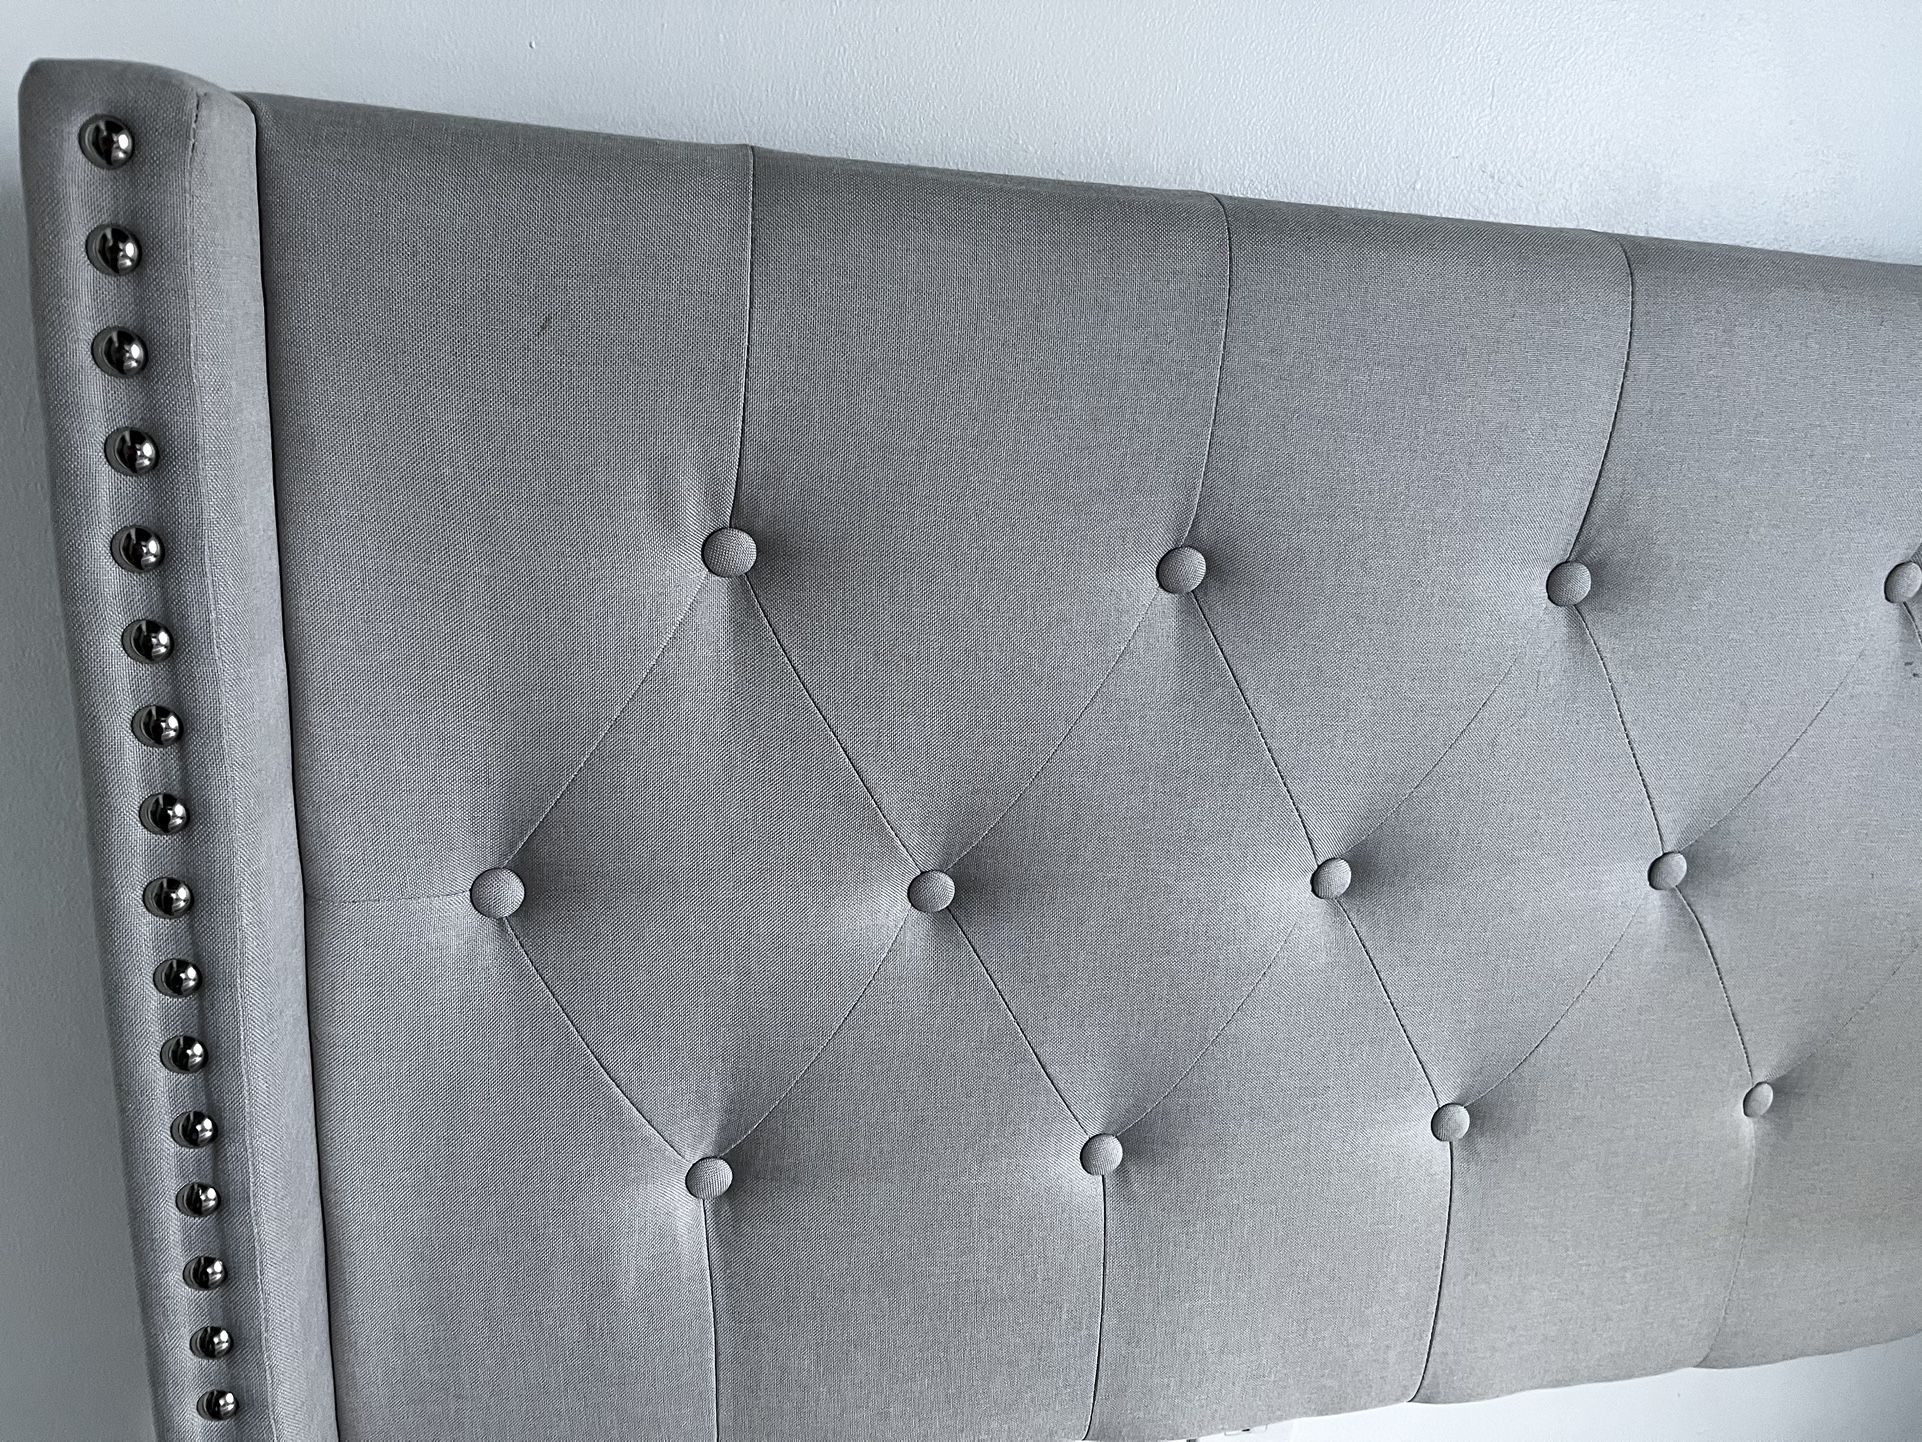 Tufted Medium Grey Upholstered Bed Frame - Queen $75